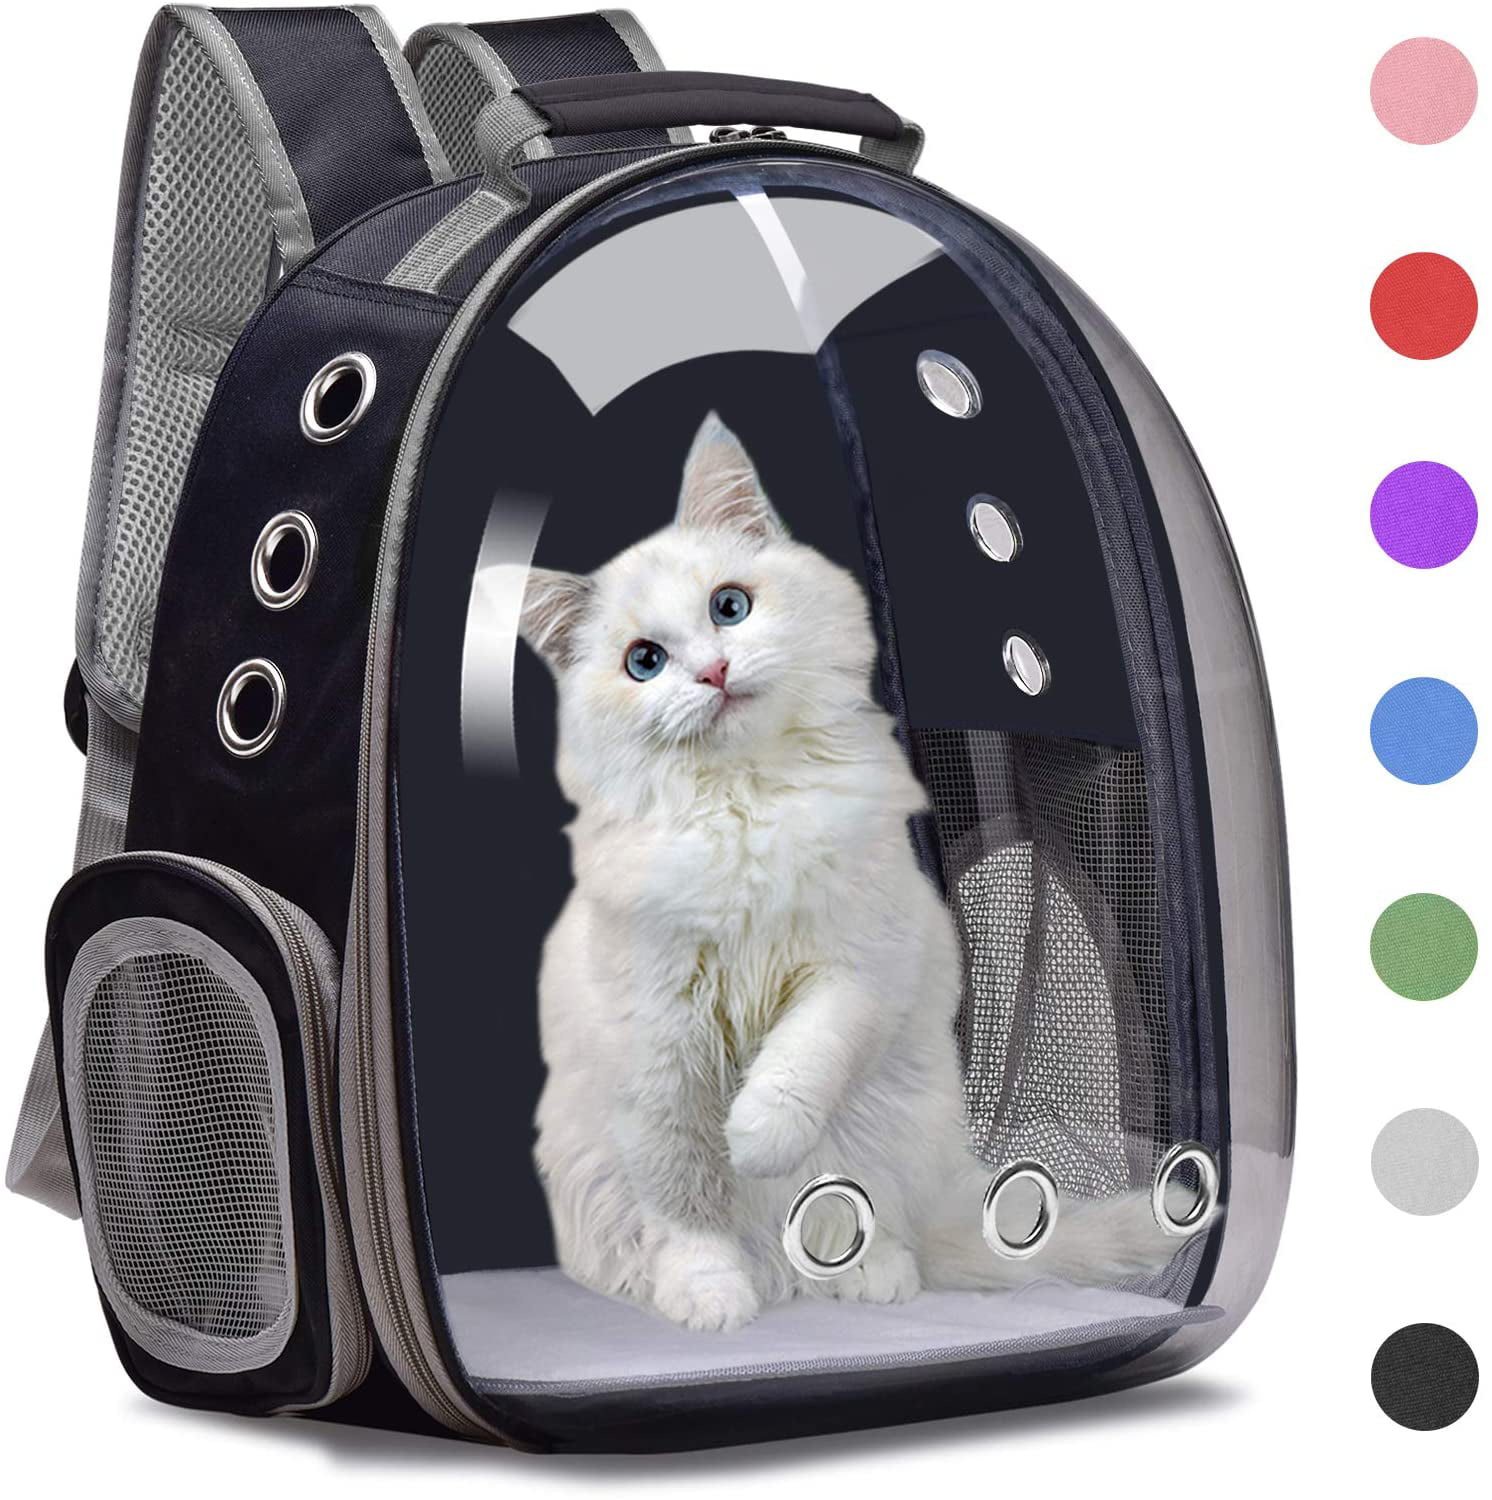 Henkelion Cat Backpack Carrier Bubble Bag, Small Dog Backpack Carrier